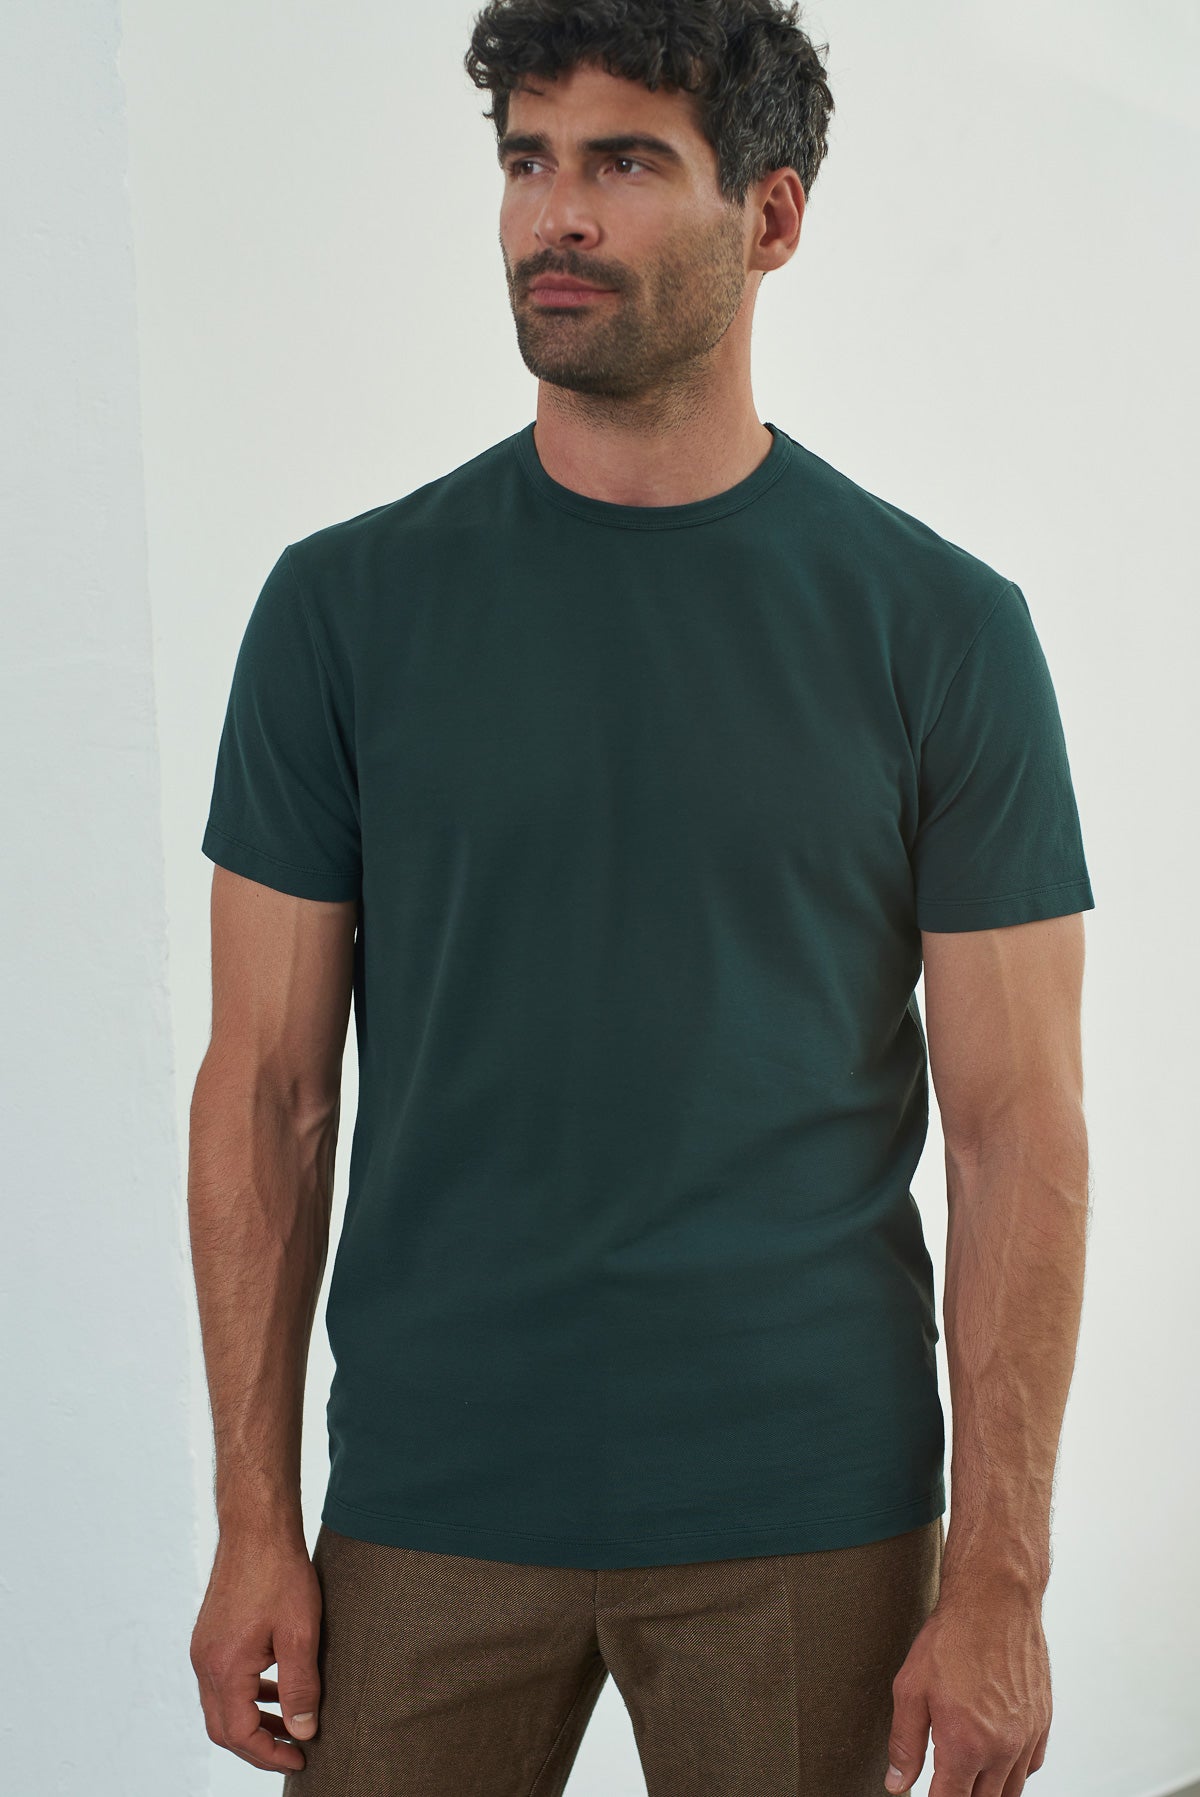 LIRON t-shirt eco pique scot green